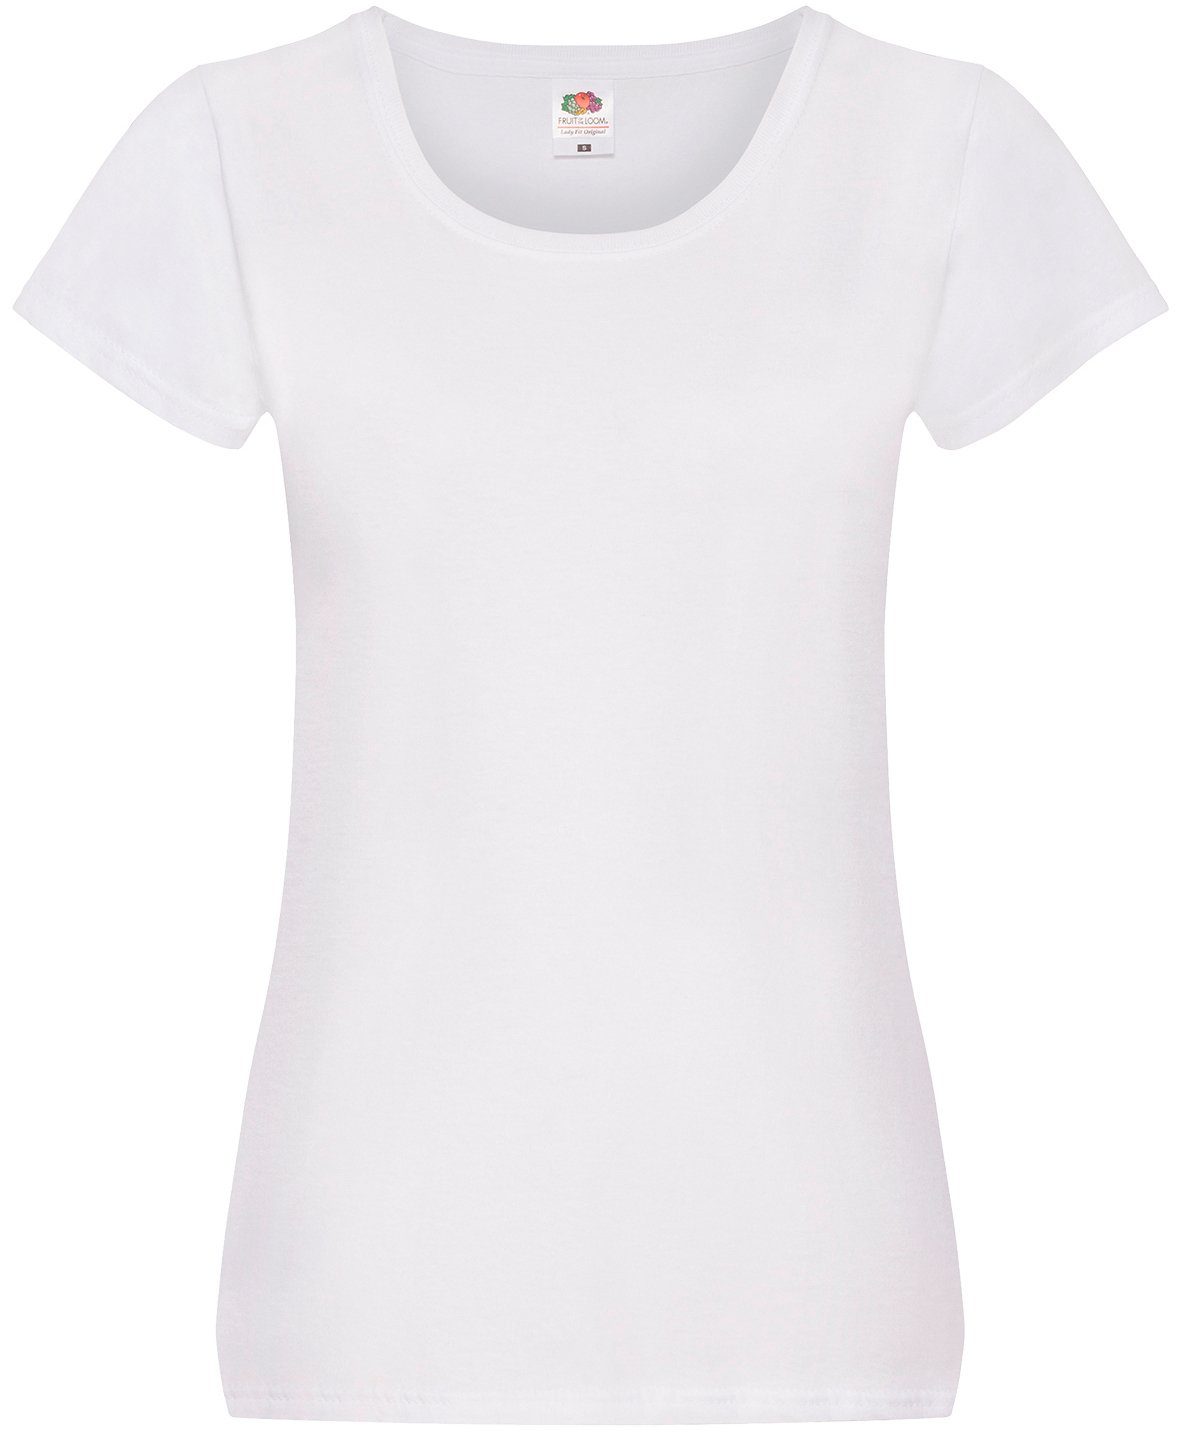 Damen Weiß TEXXILLA T-Shirt T-Shirt